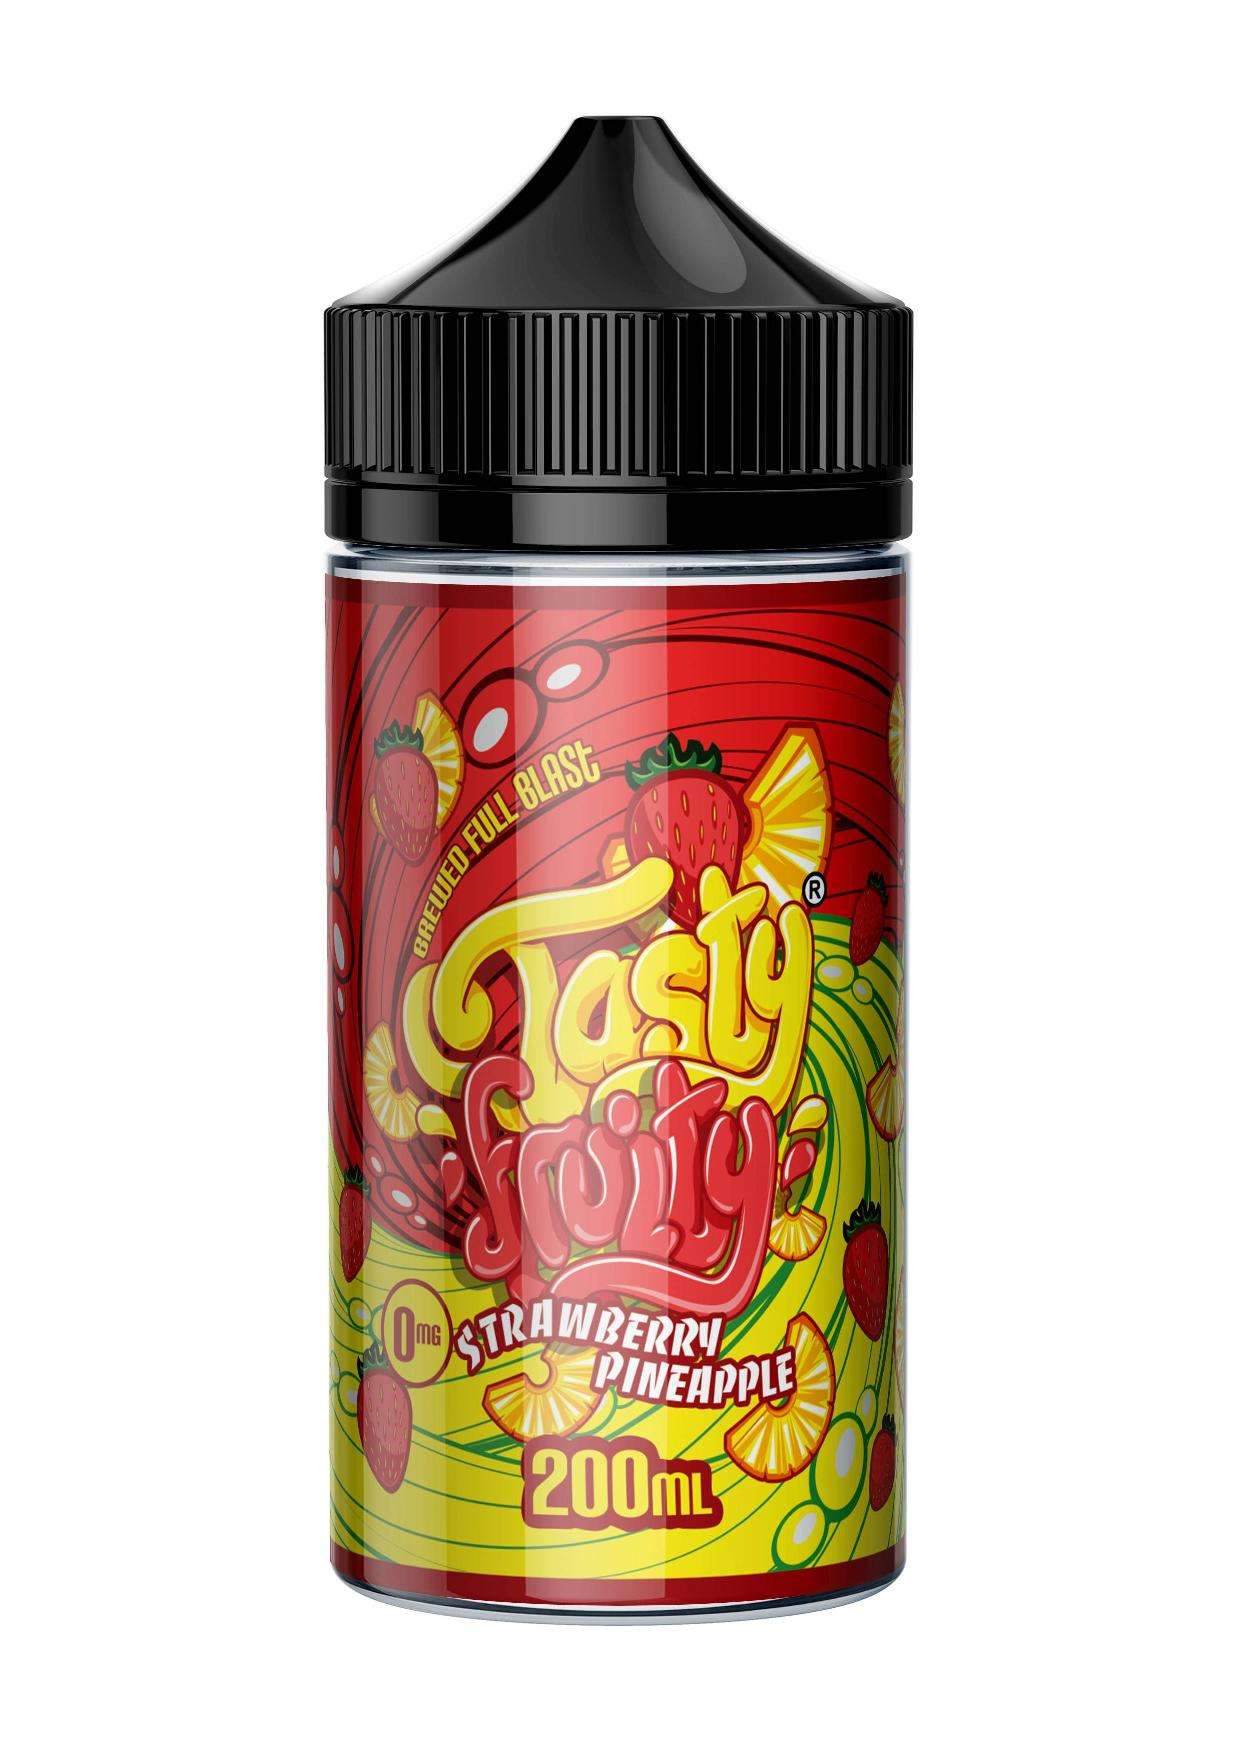  Tasty Fruity - Strawberry Pineapple - 200ml 